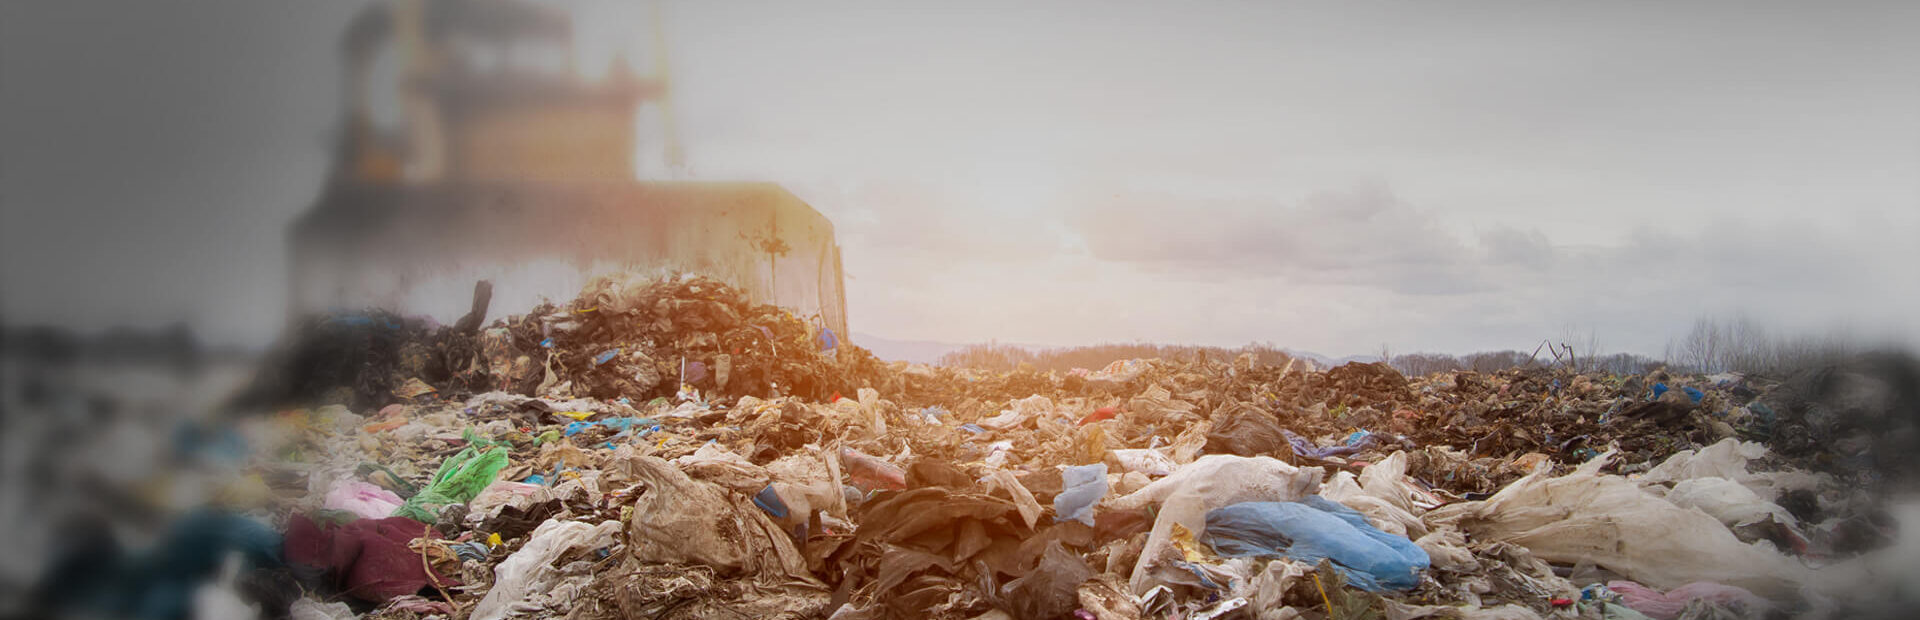 Garbage and debris at a landfill